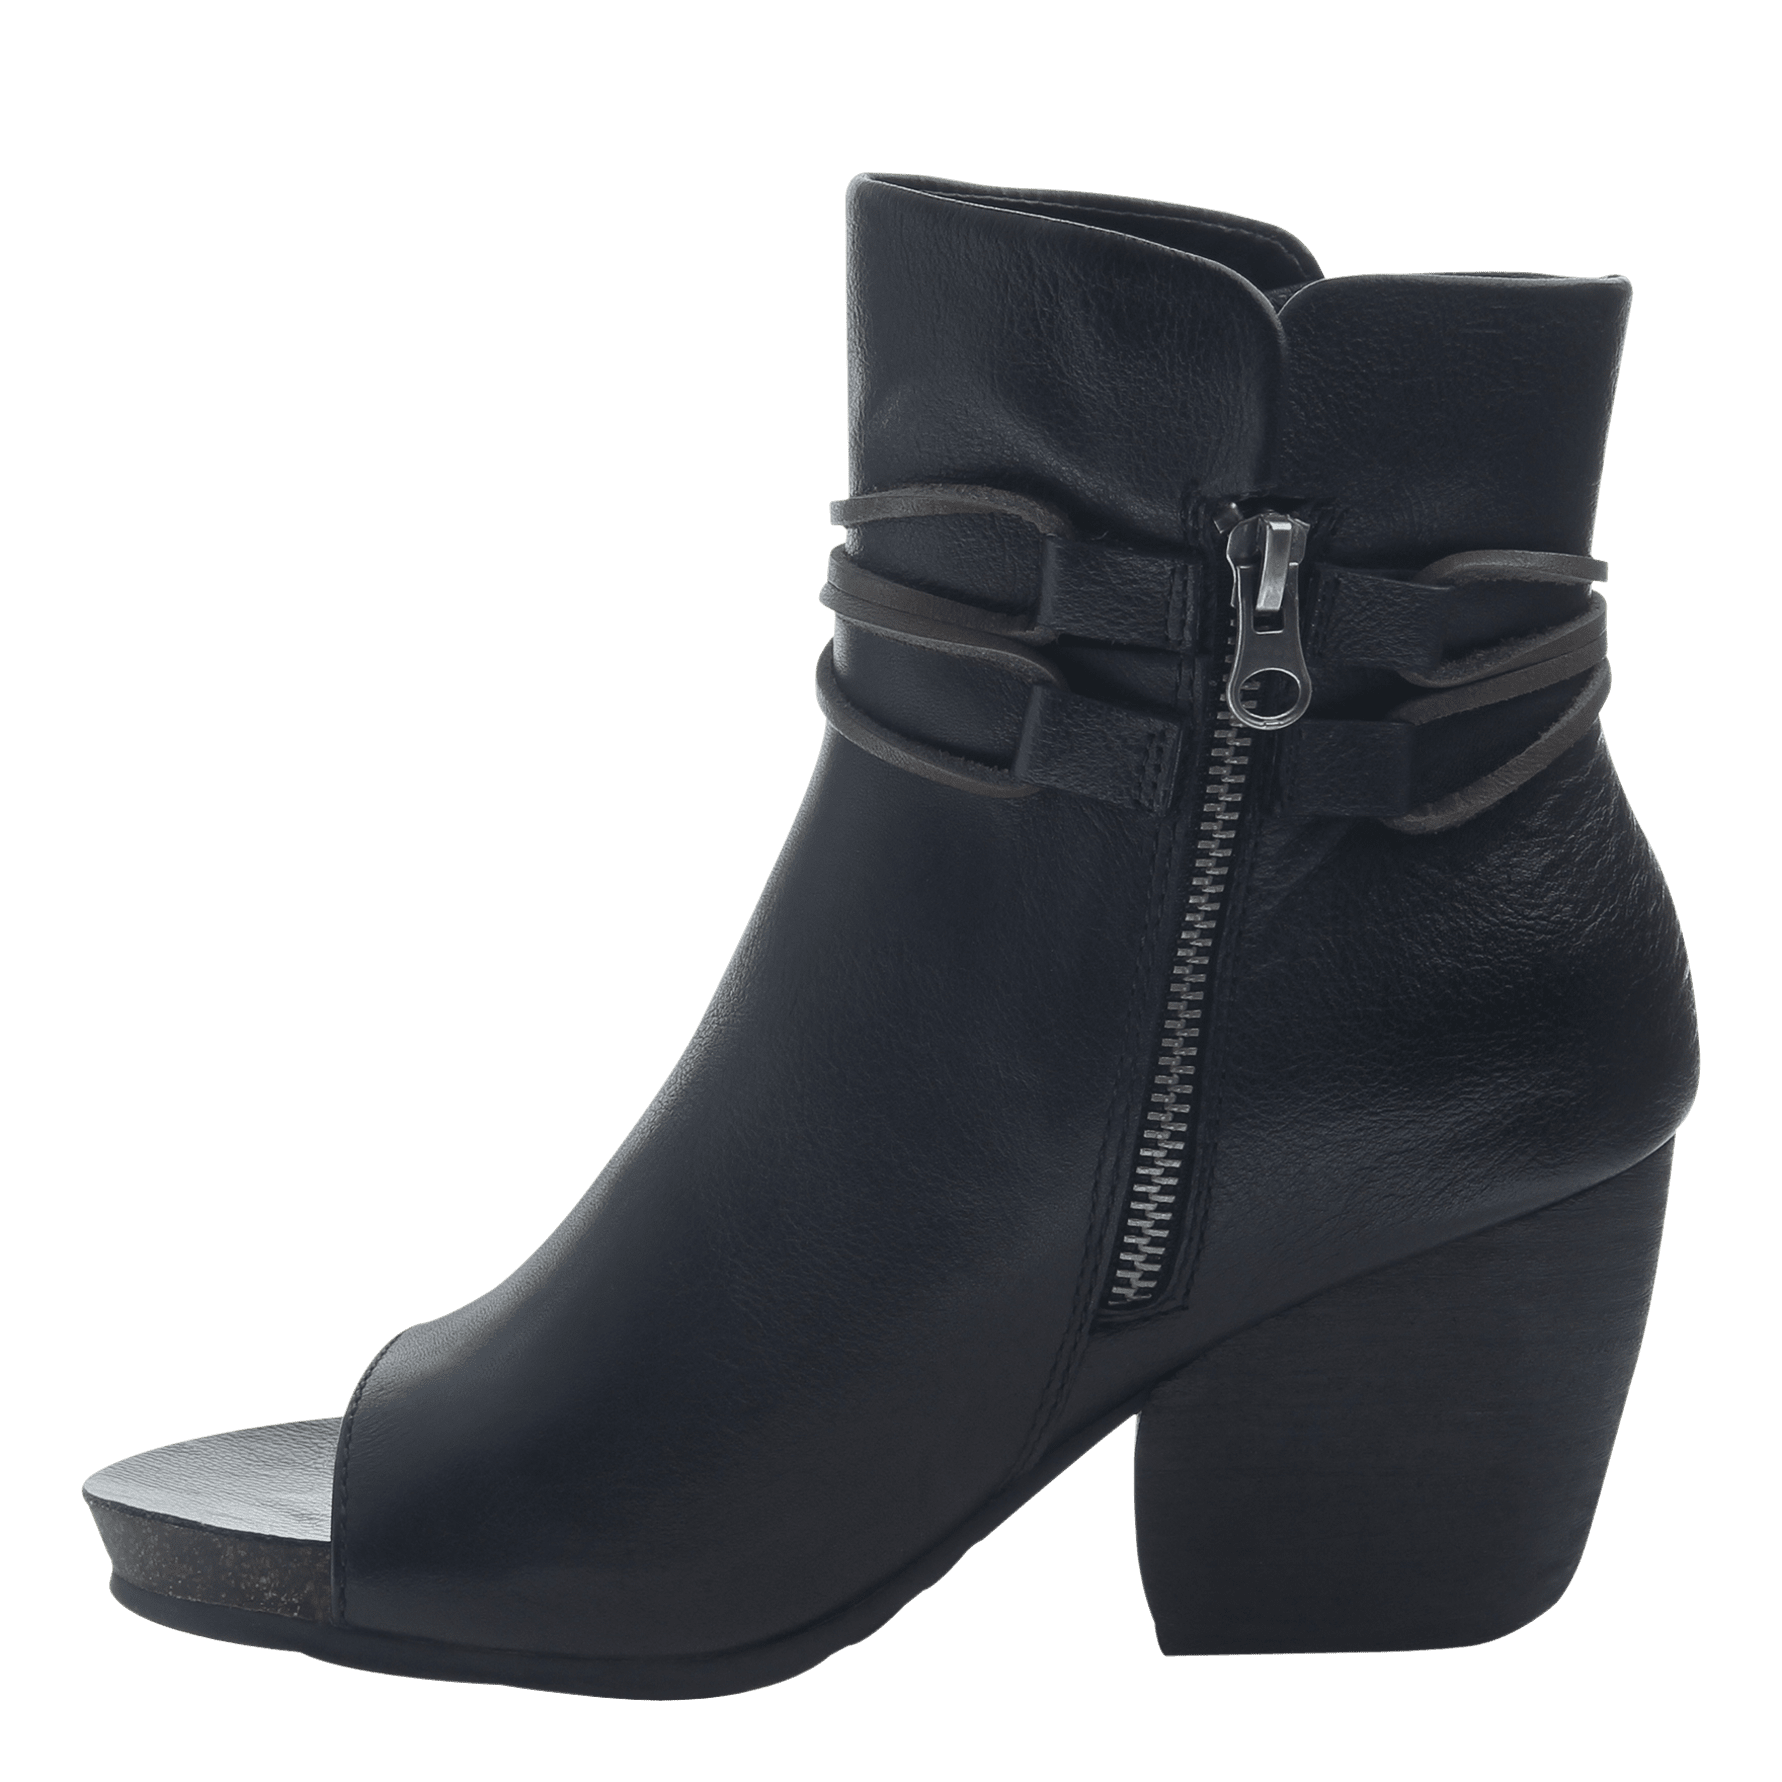 women's open toe ankle boots